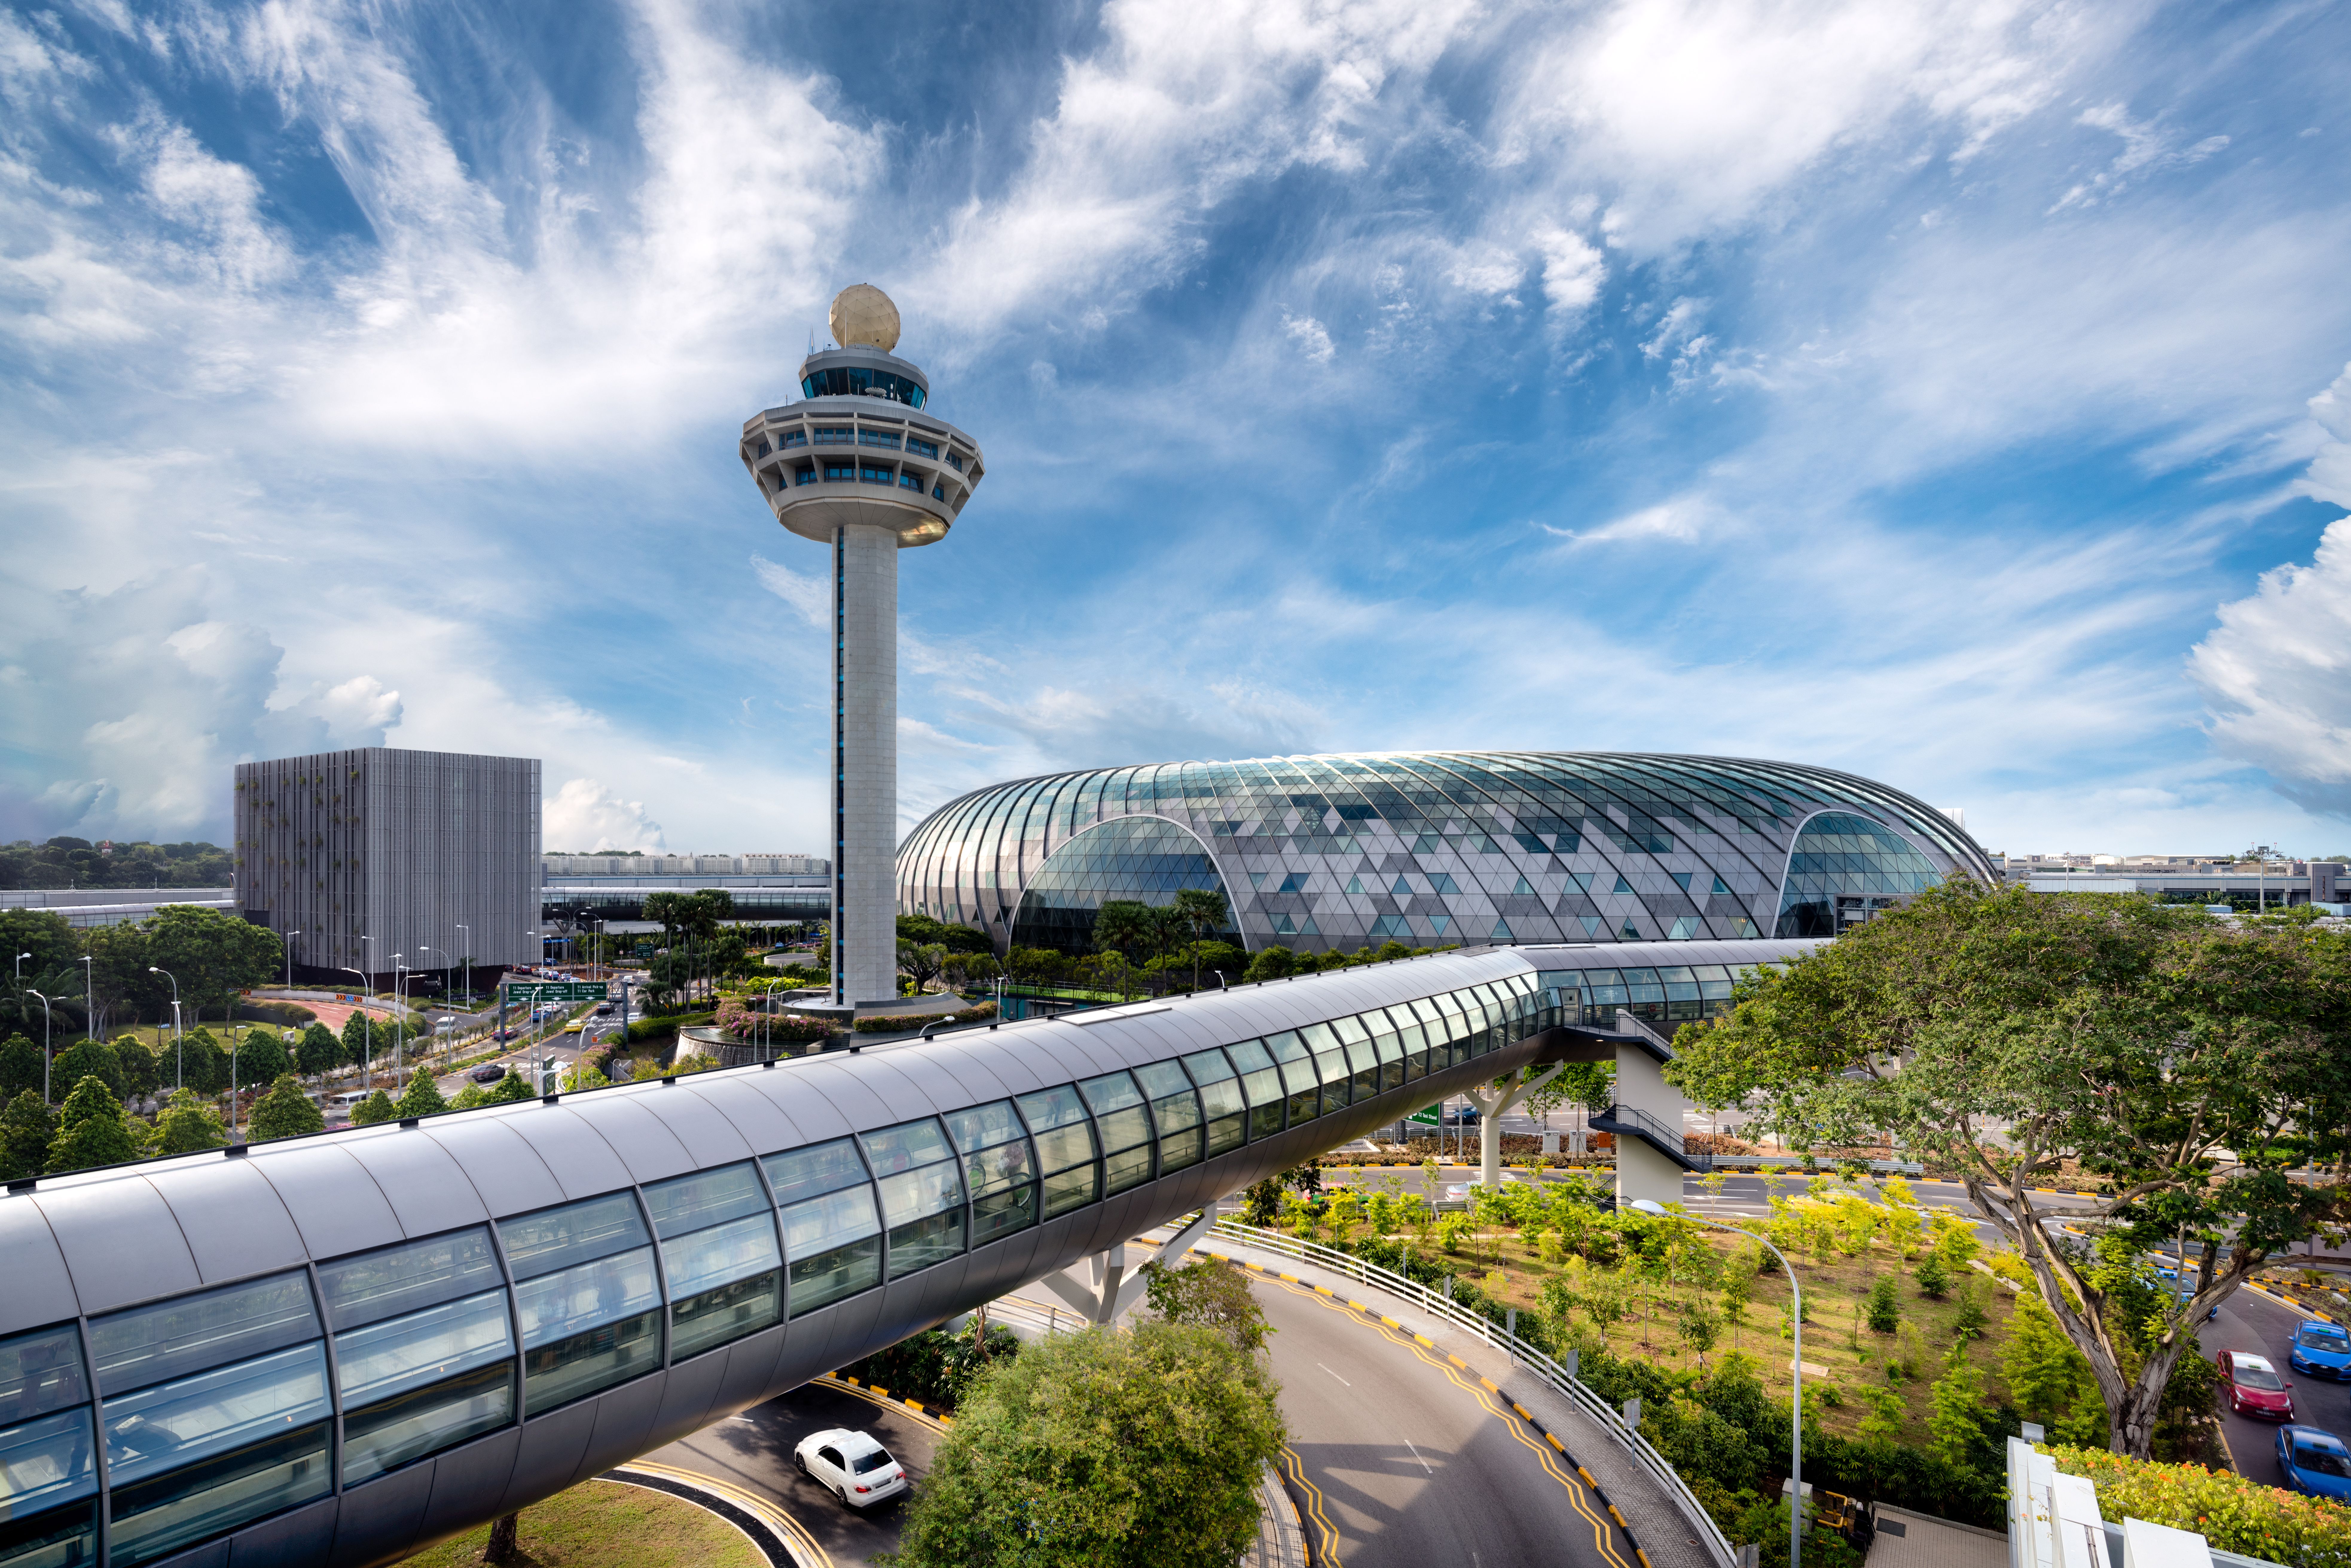 Singapore Changi Airport - Terminal 1